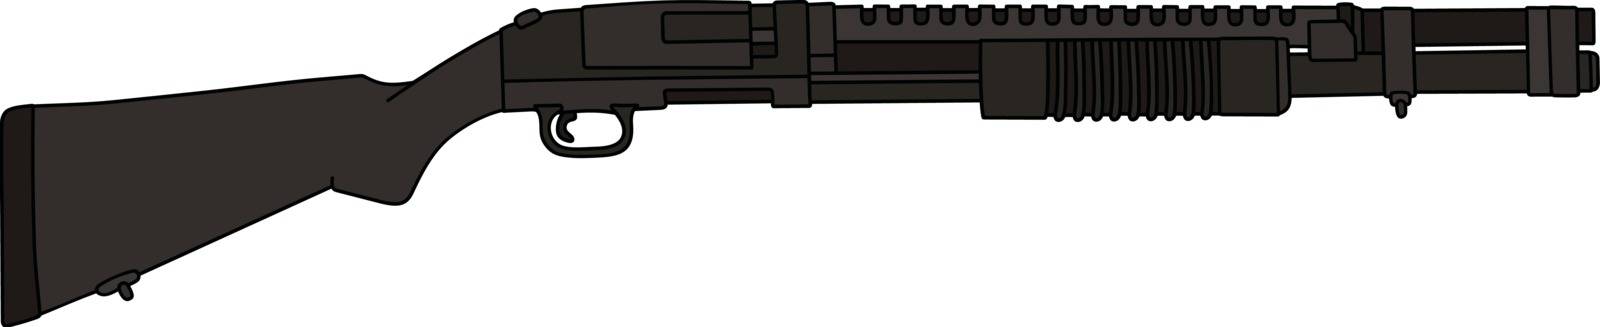 Hand drawing of a classic black repeating pump shotgun